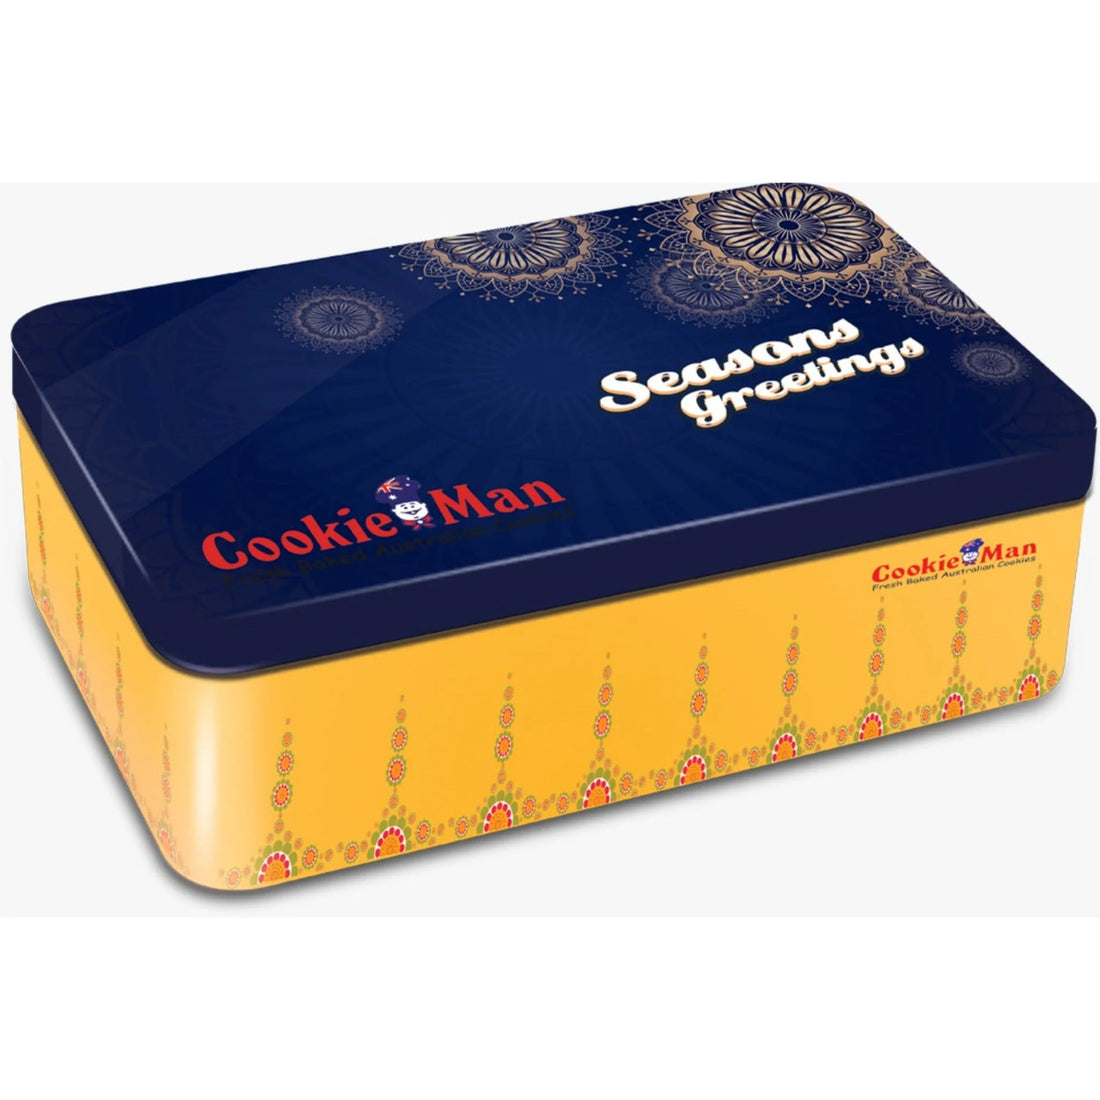 Cookieman Festive Giftbox - Large (500 Gms)